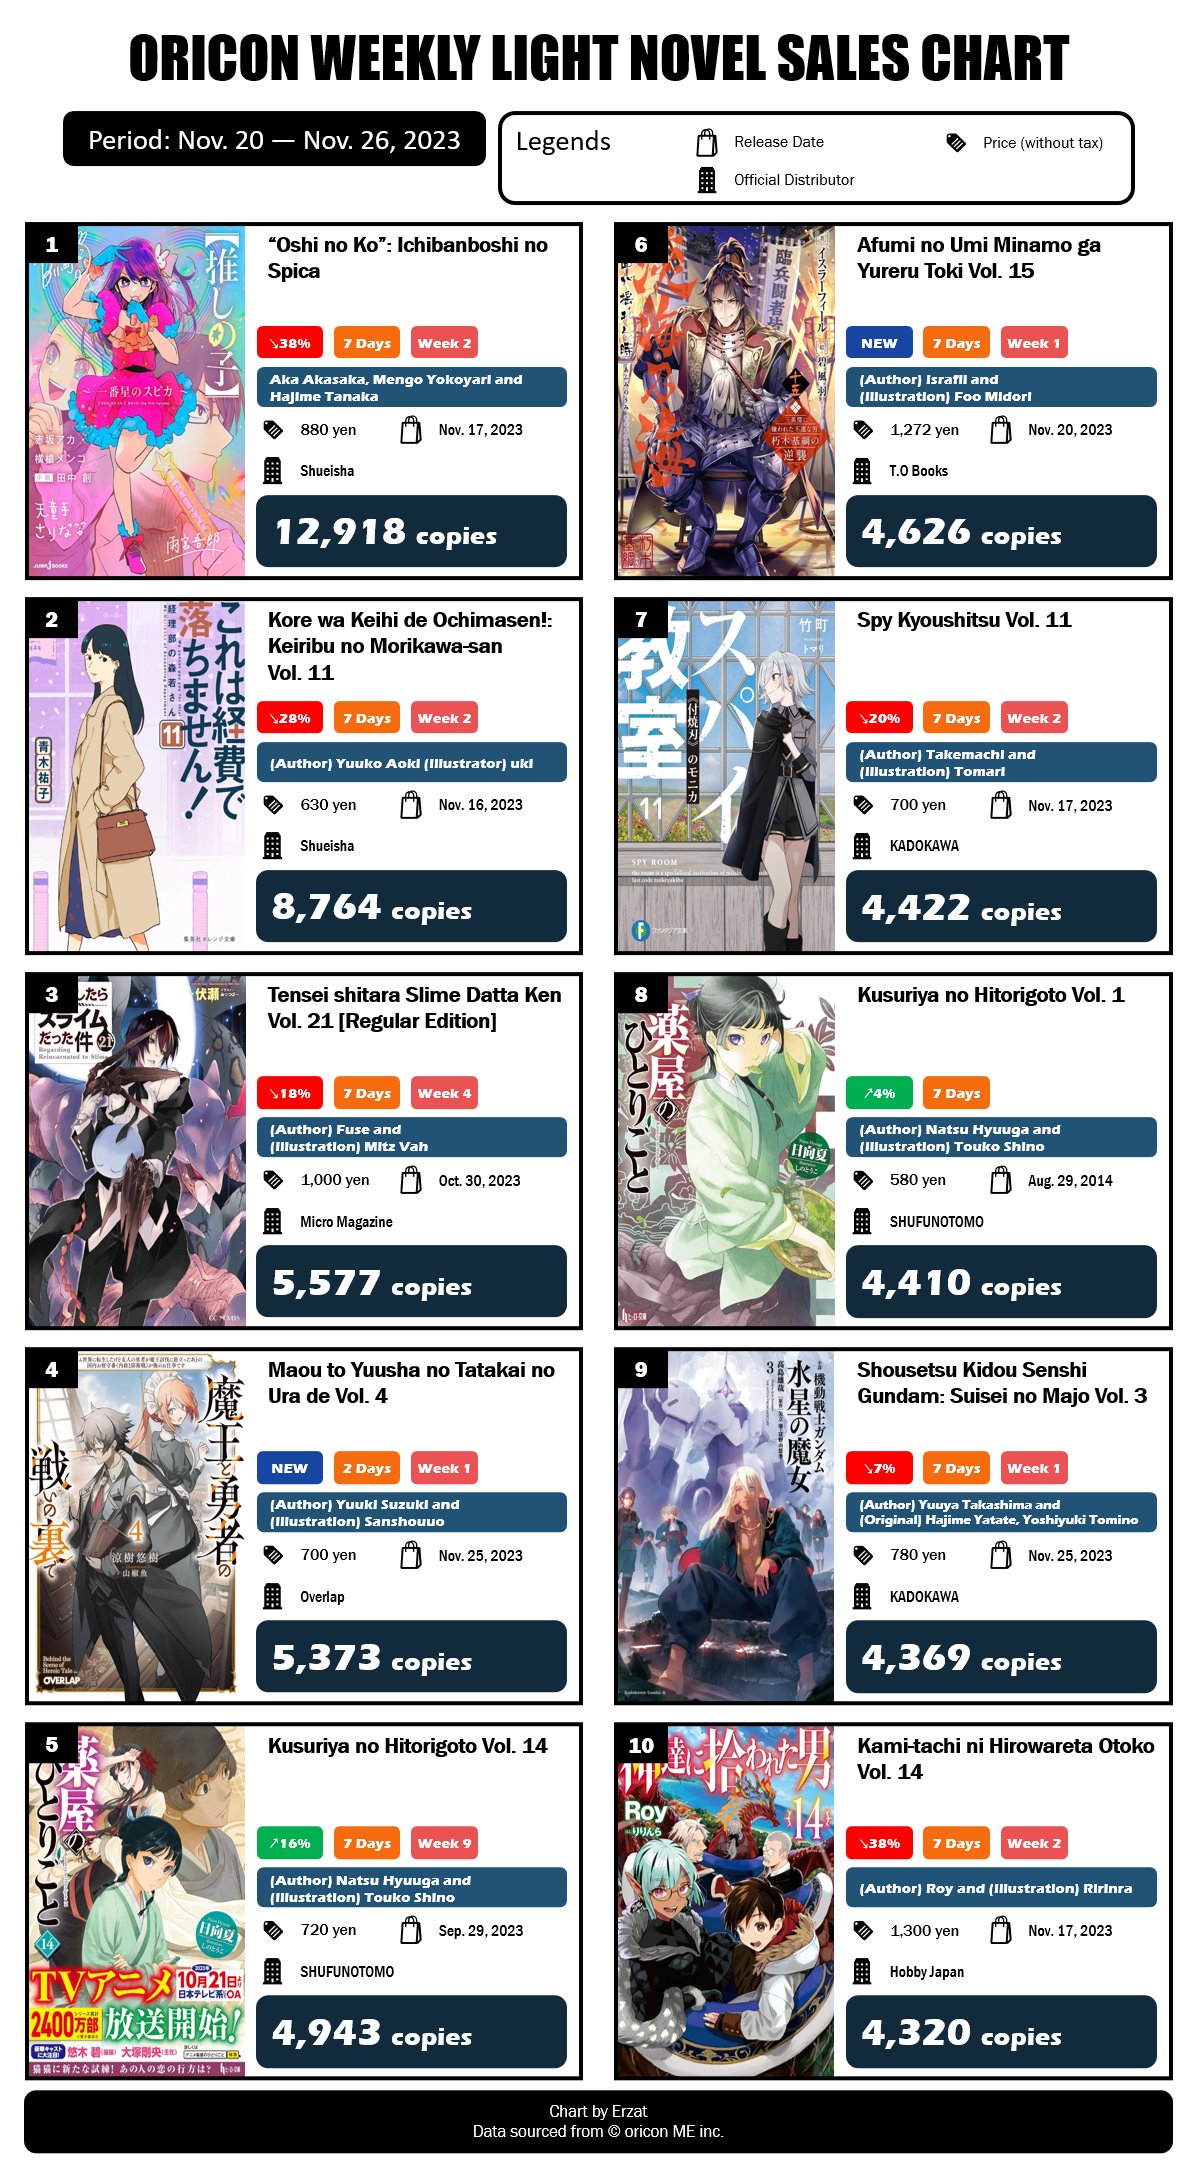 Japan Top Weekly Manga Sales Ranking: June 12 - June 18, 2023 - Erzat